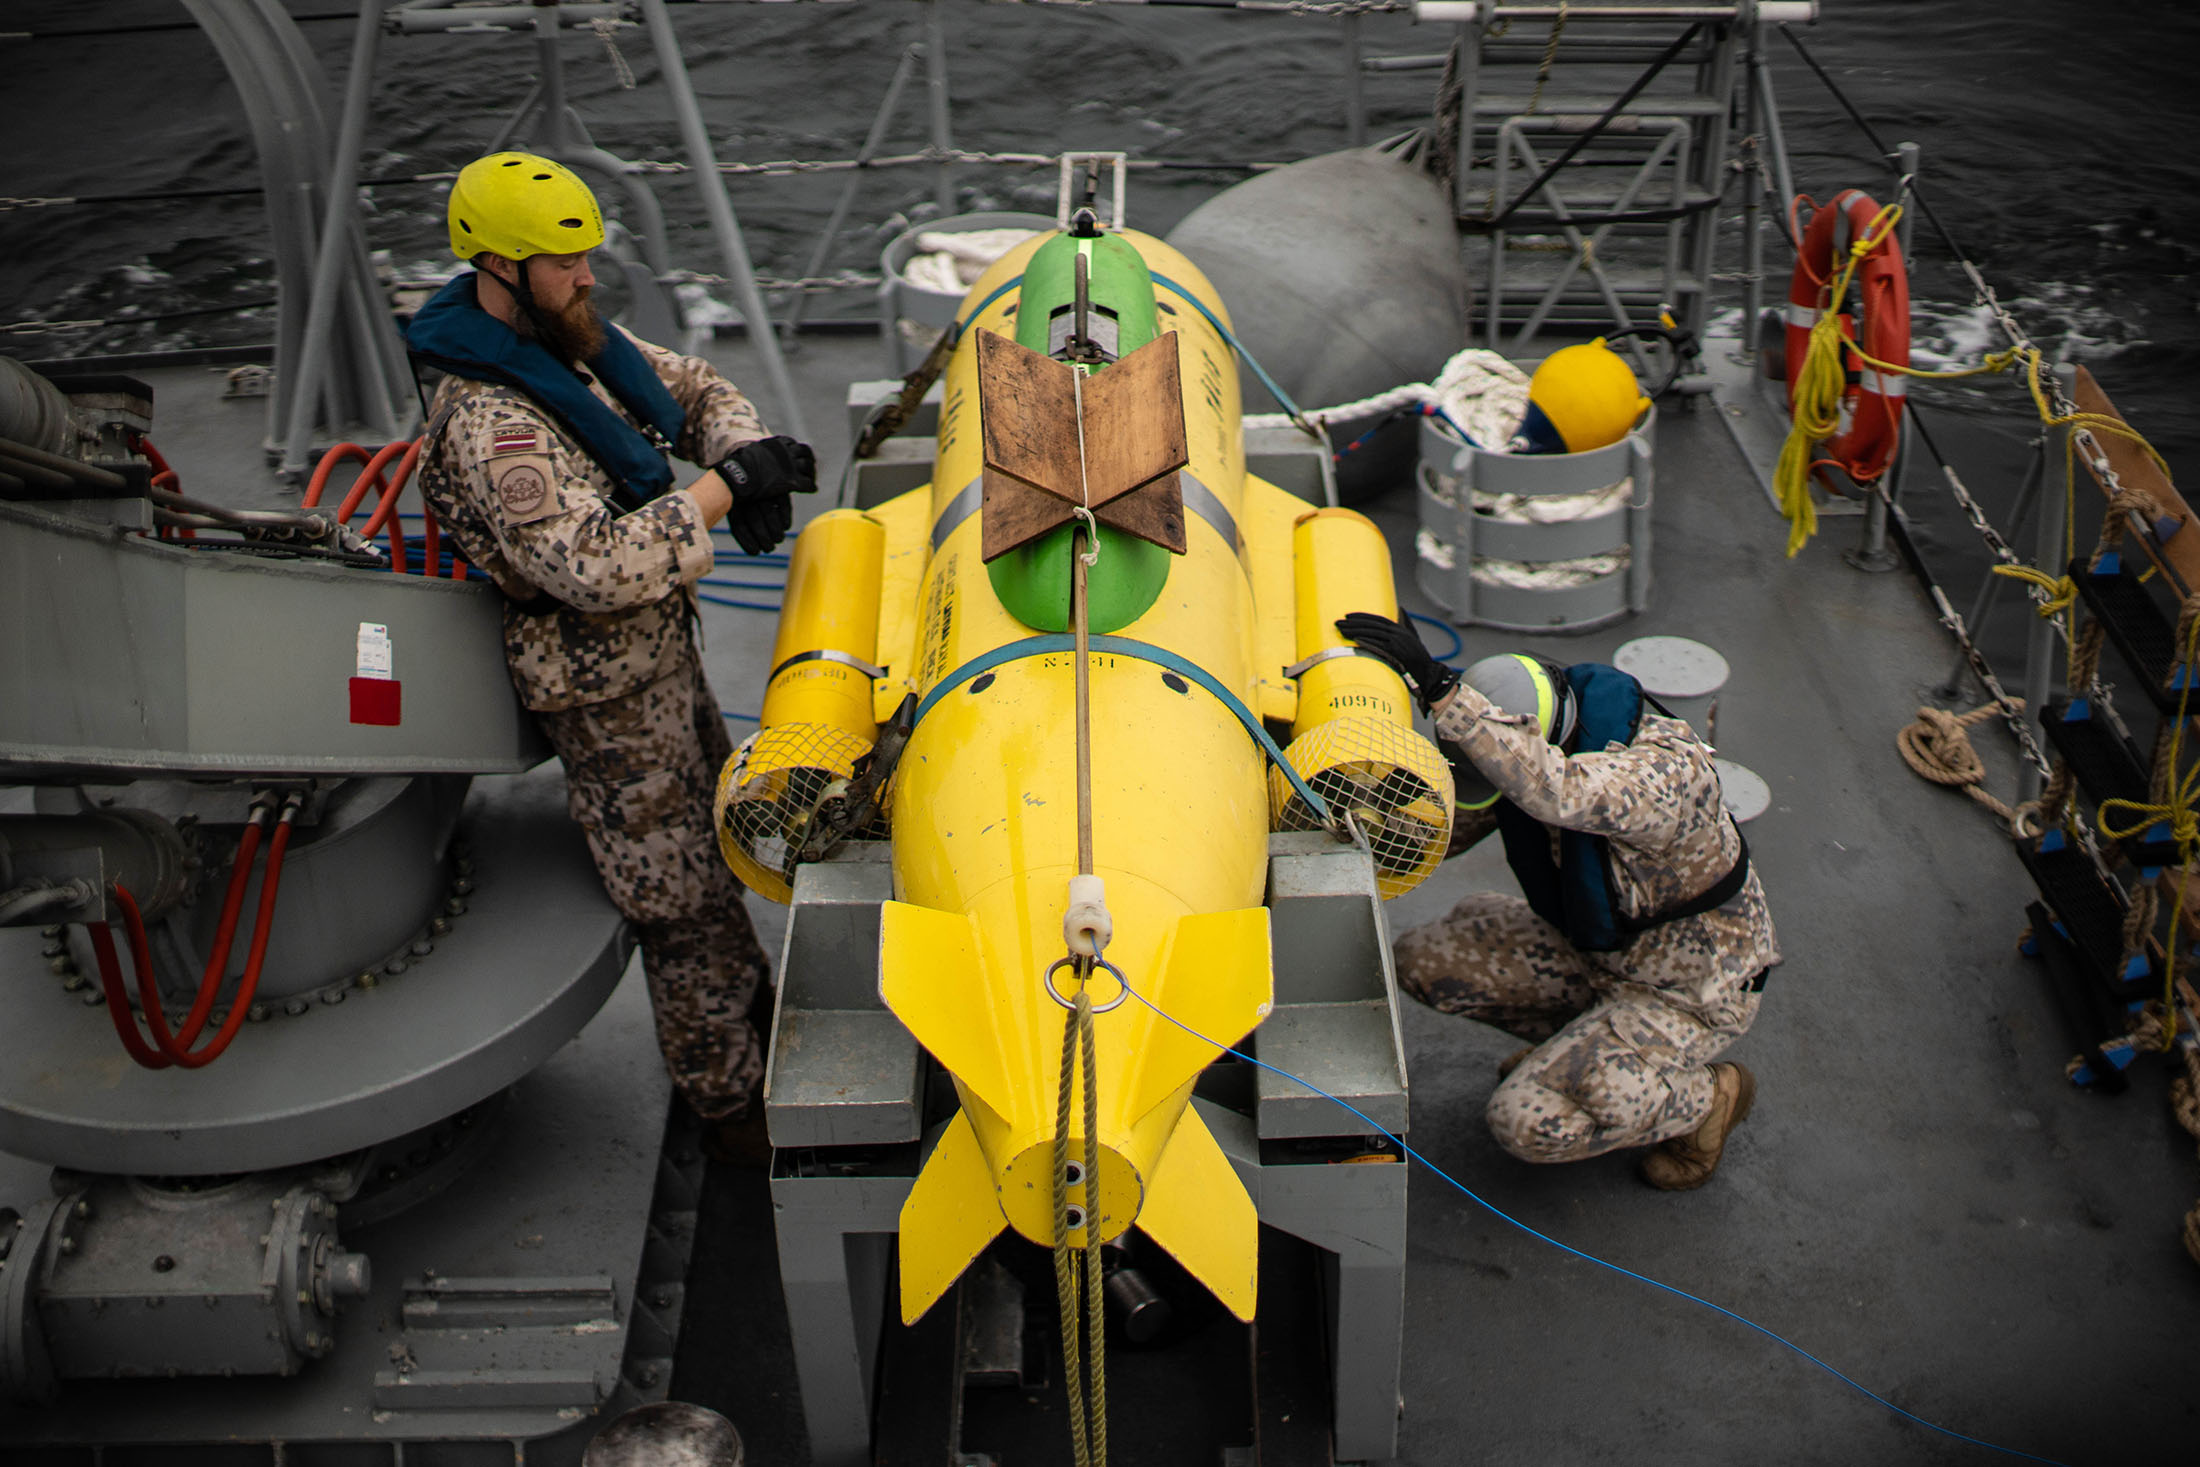 Crewmembers from the LVNS TÄlivaldis with the ship's ROV (remote operated vehicle) PAP 104, an underwater robot that helps identify and dispose of mines or unexploded ordnance.